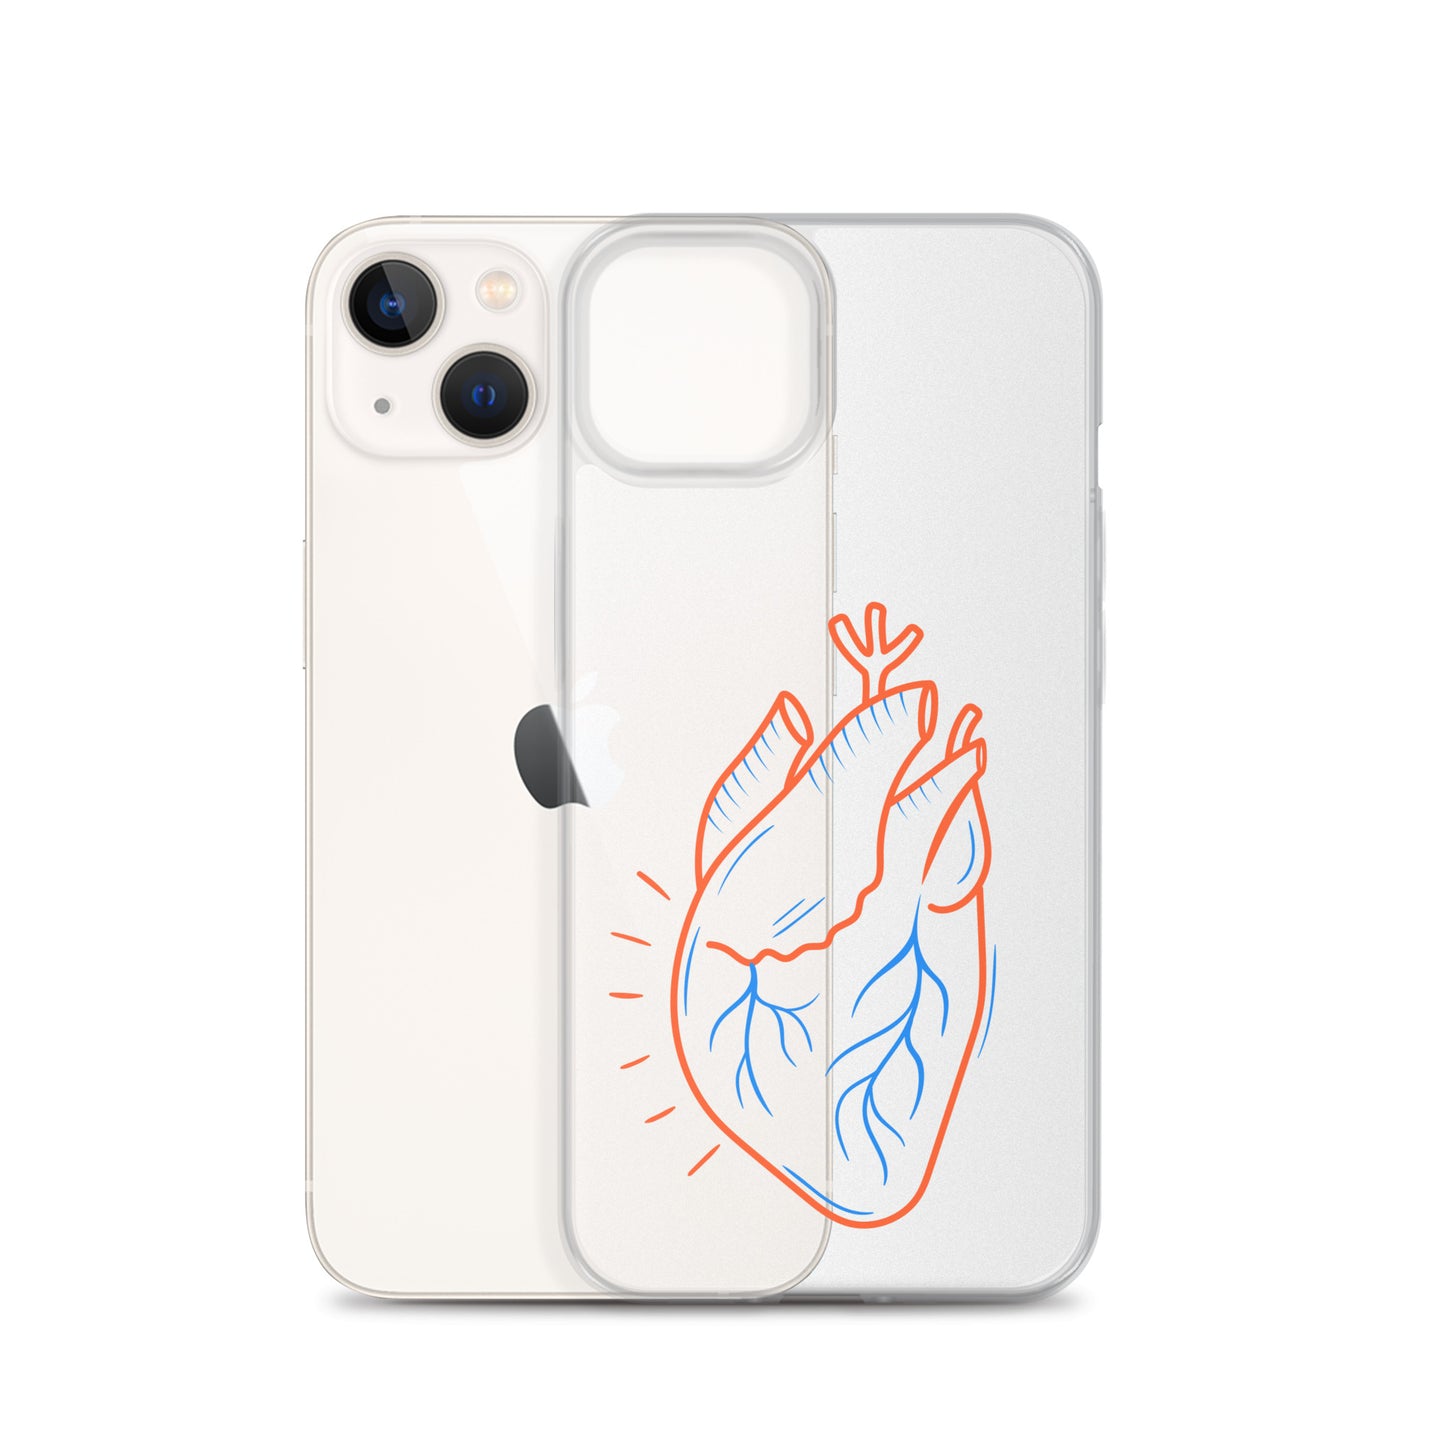 Minimalist Line Art Heart iPhone Case